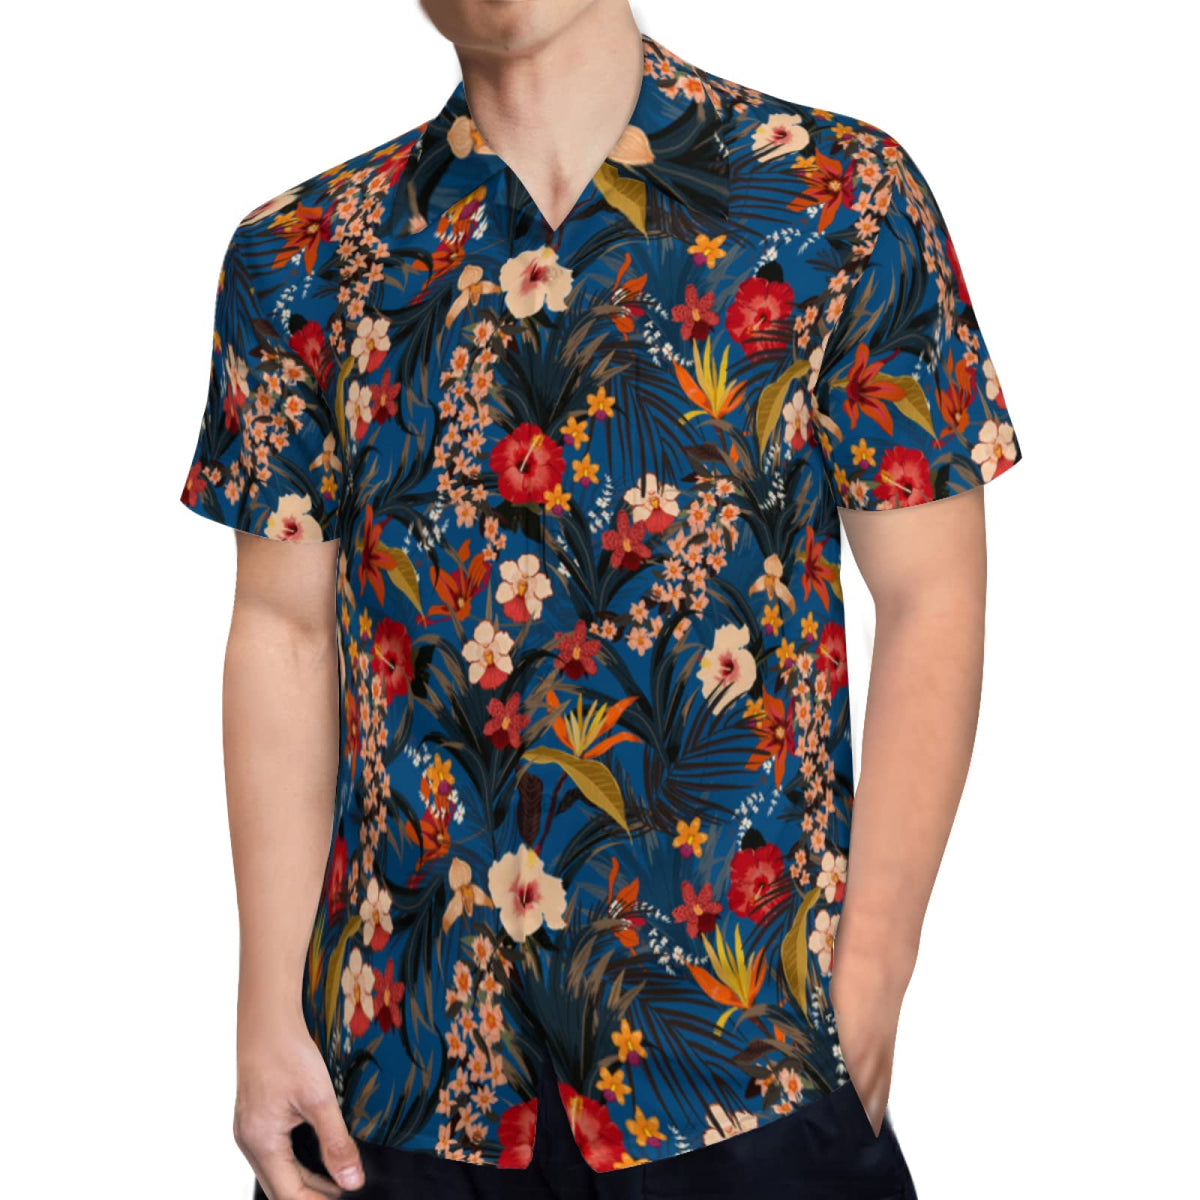 Men's Hawaiian Shirt Casual Button Down Short Sleeves Beach Shirt - Tropical